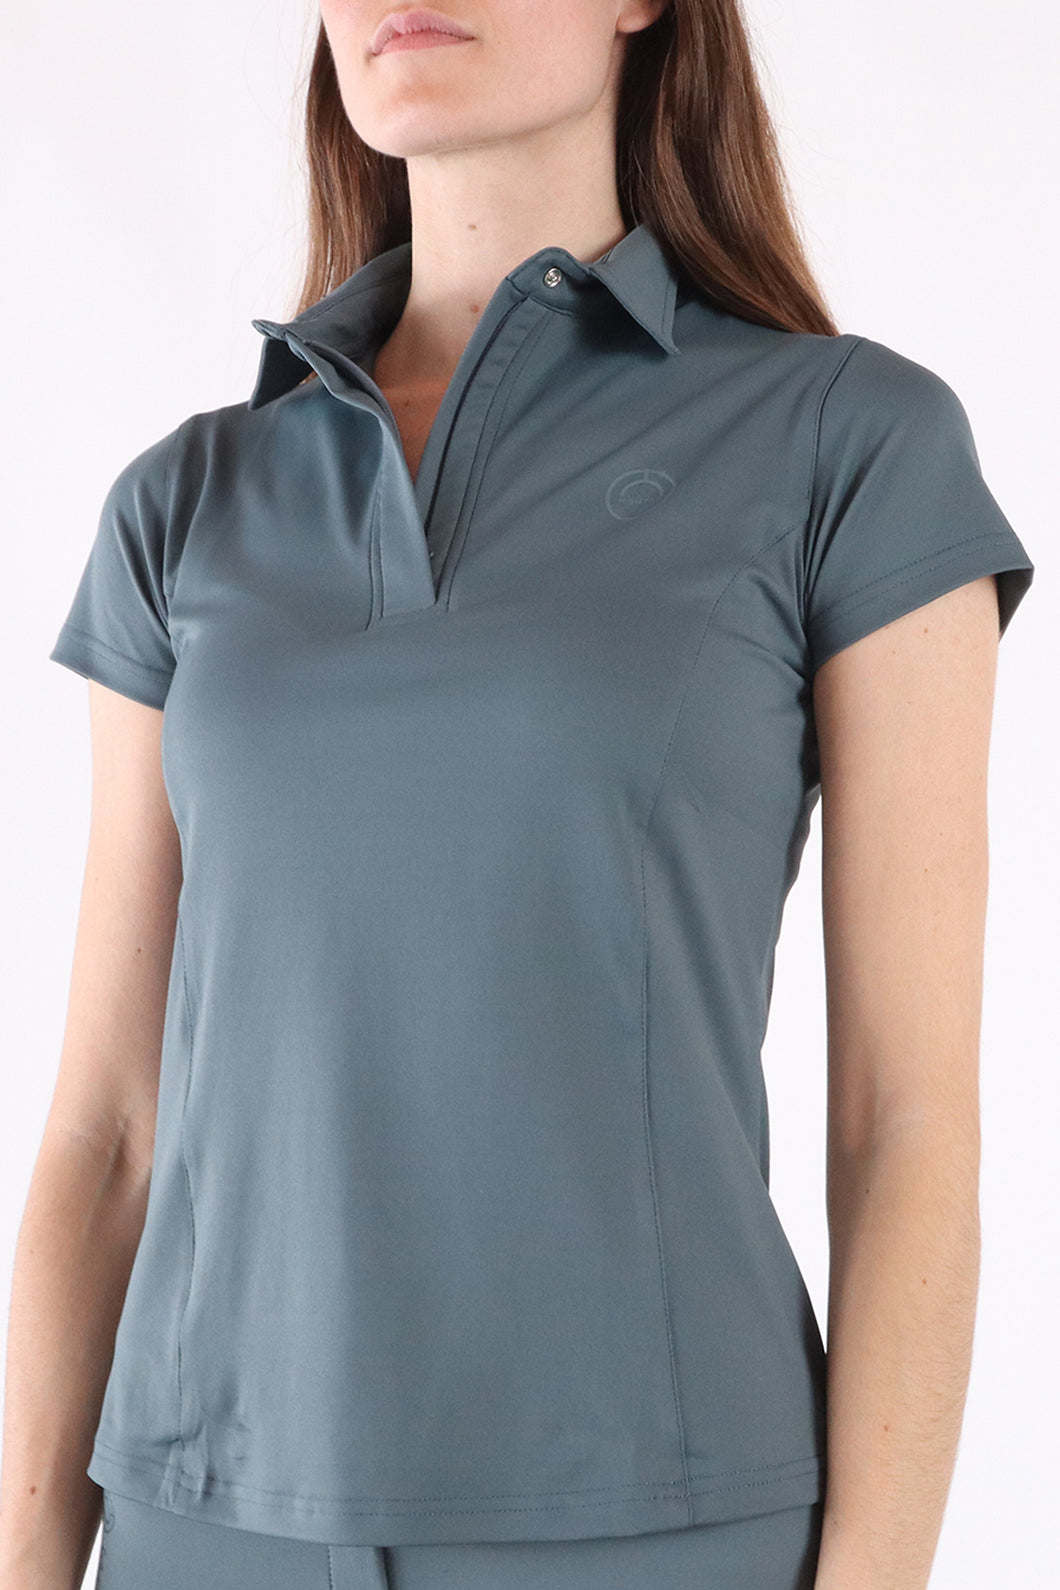 Rebecca Technical Basic Polo Shirt - Jade